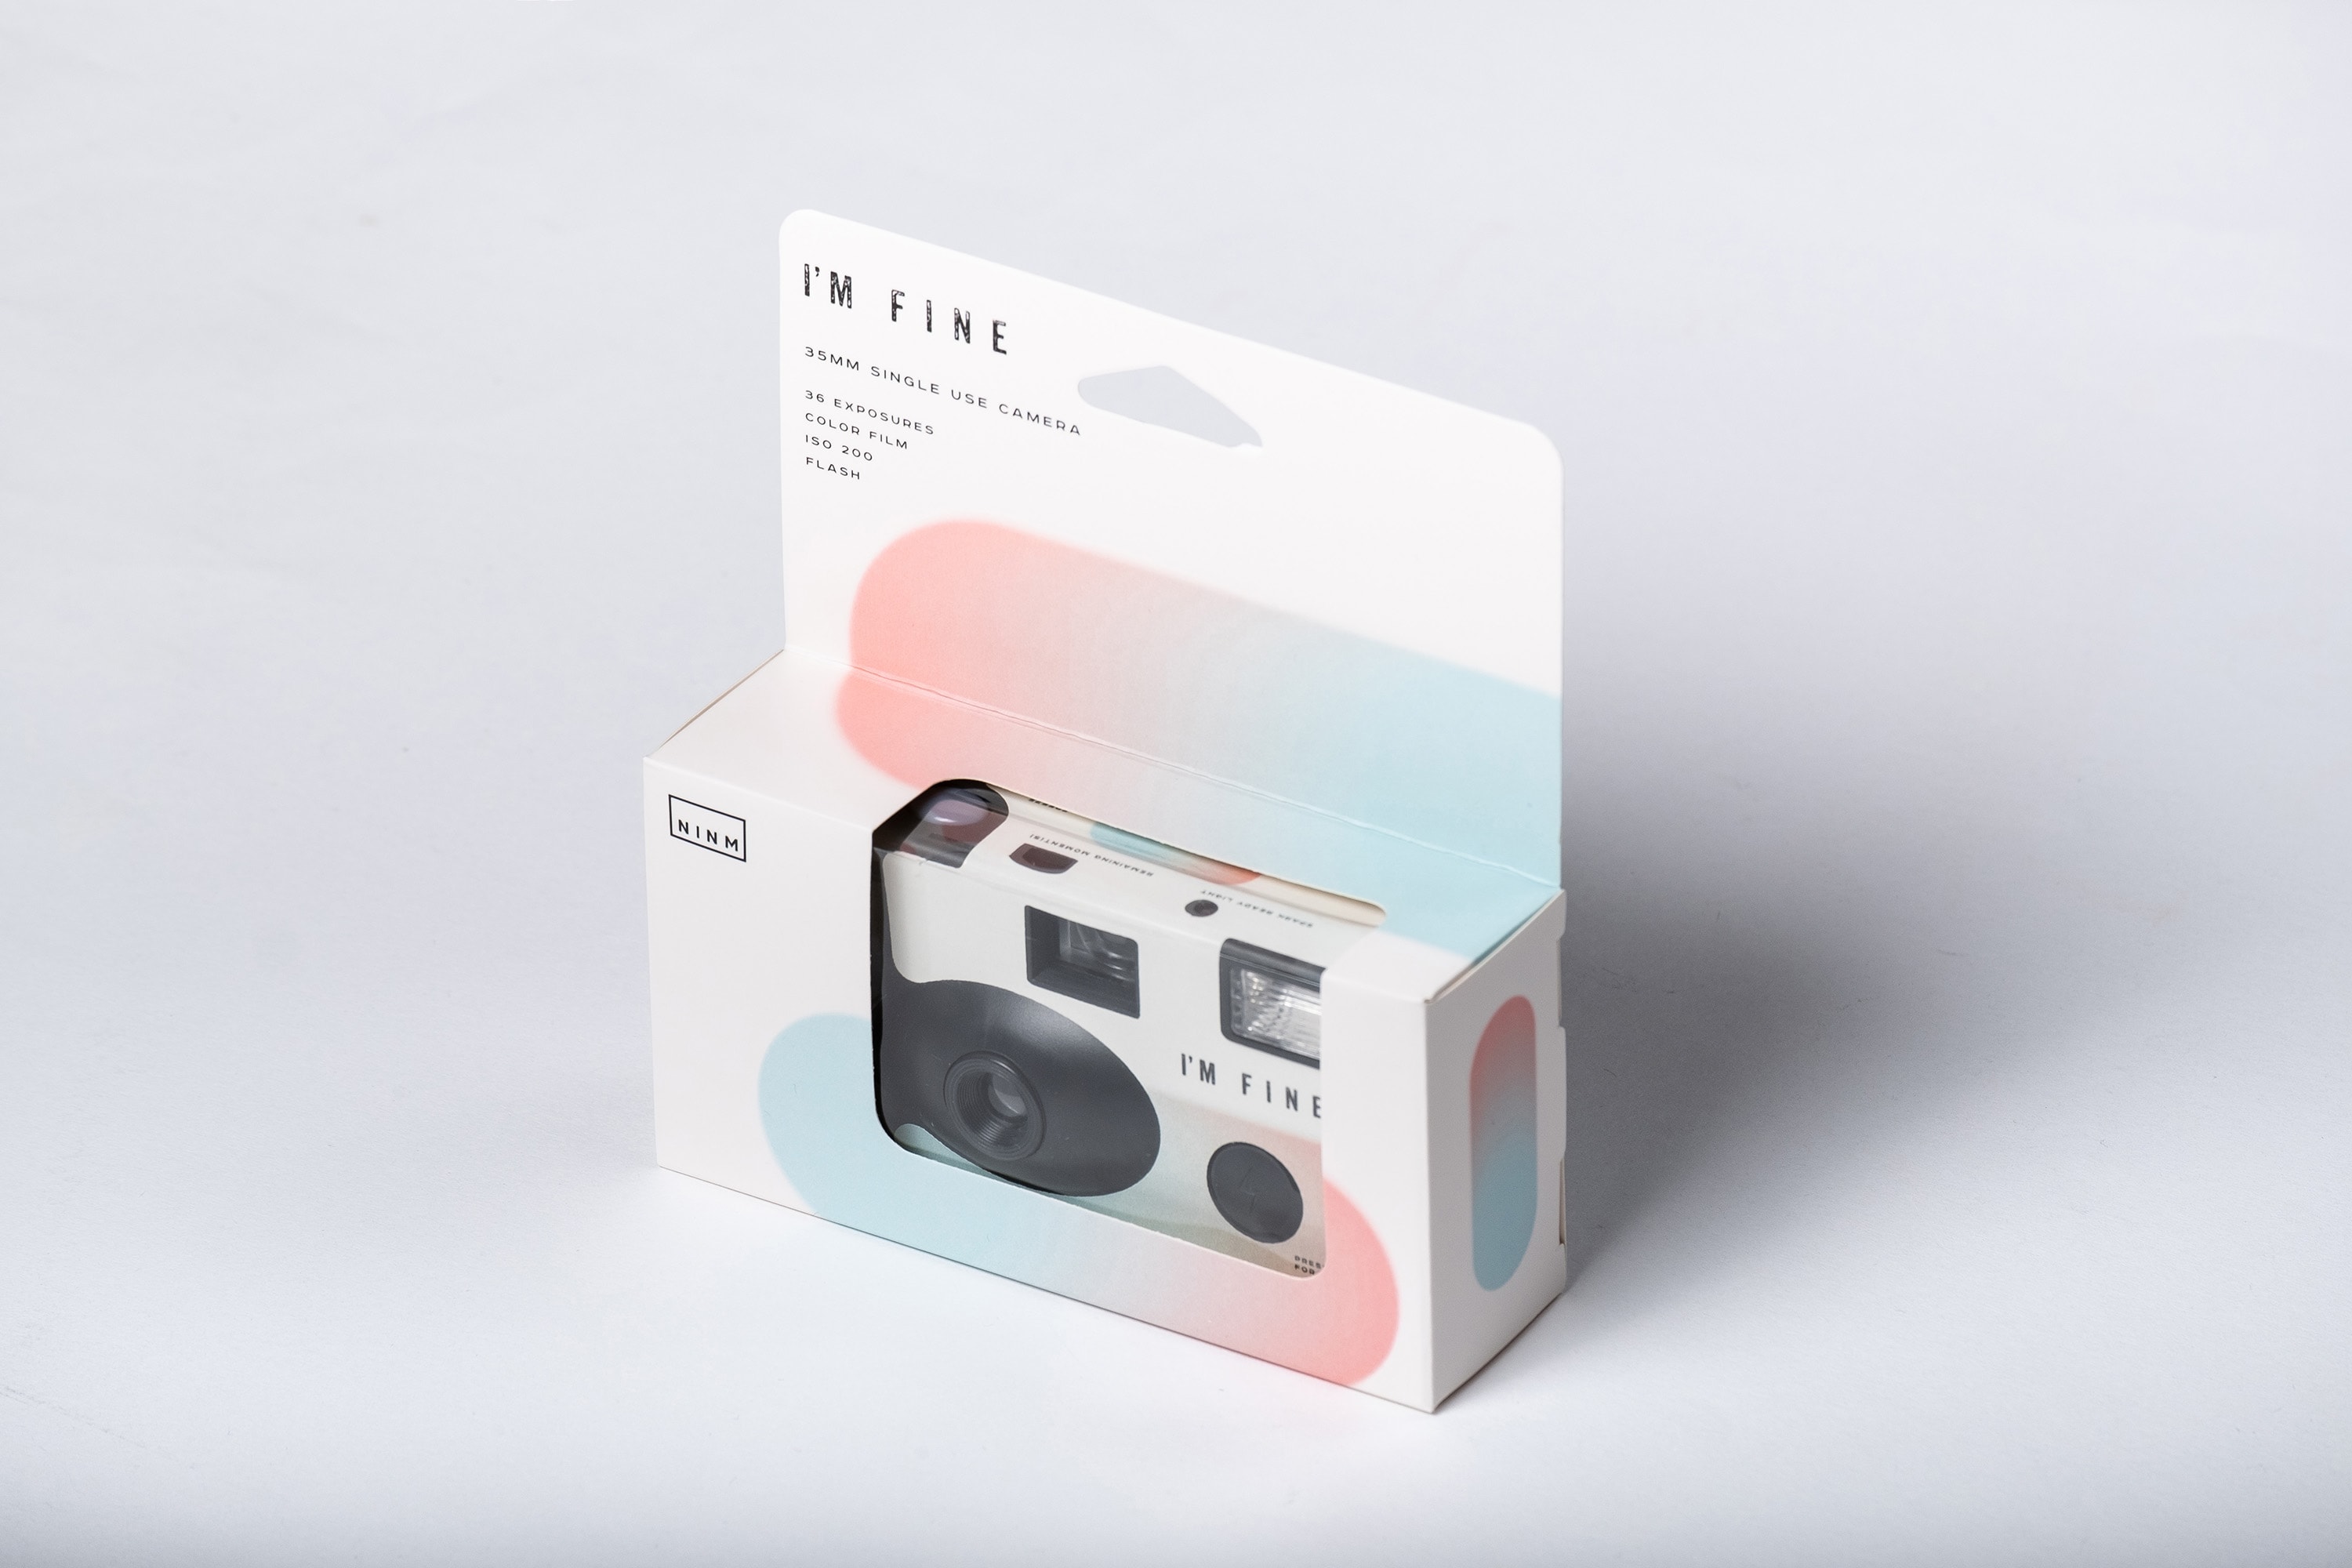 NINM Lab 推出「I'M FINE」即用即棄菲林相機